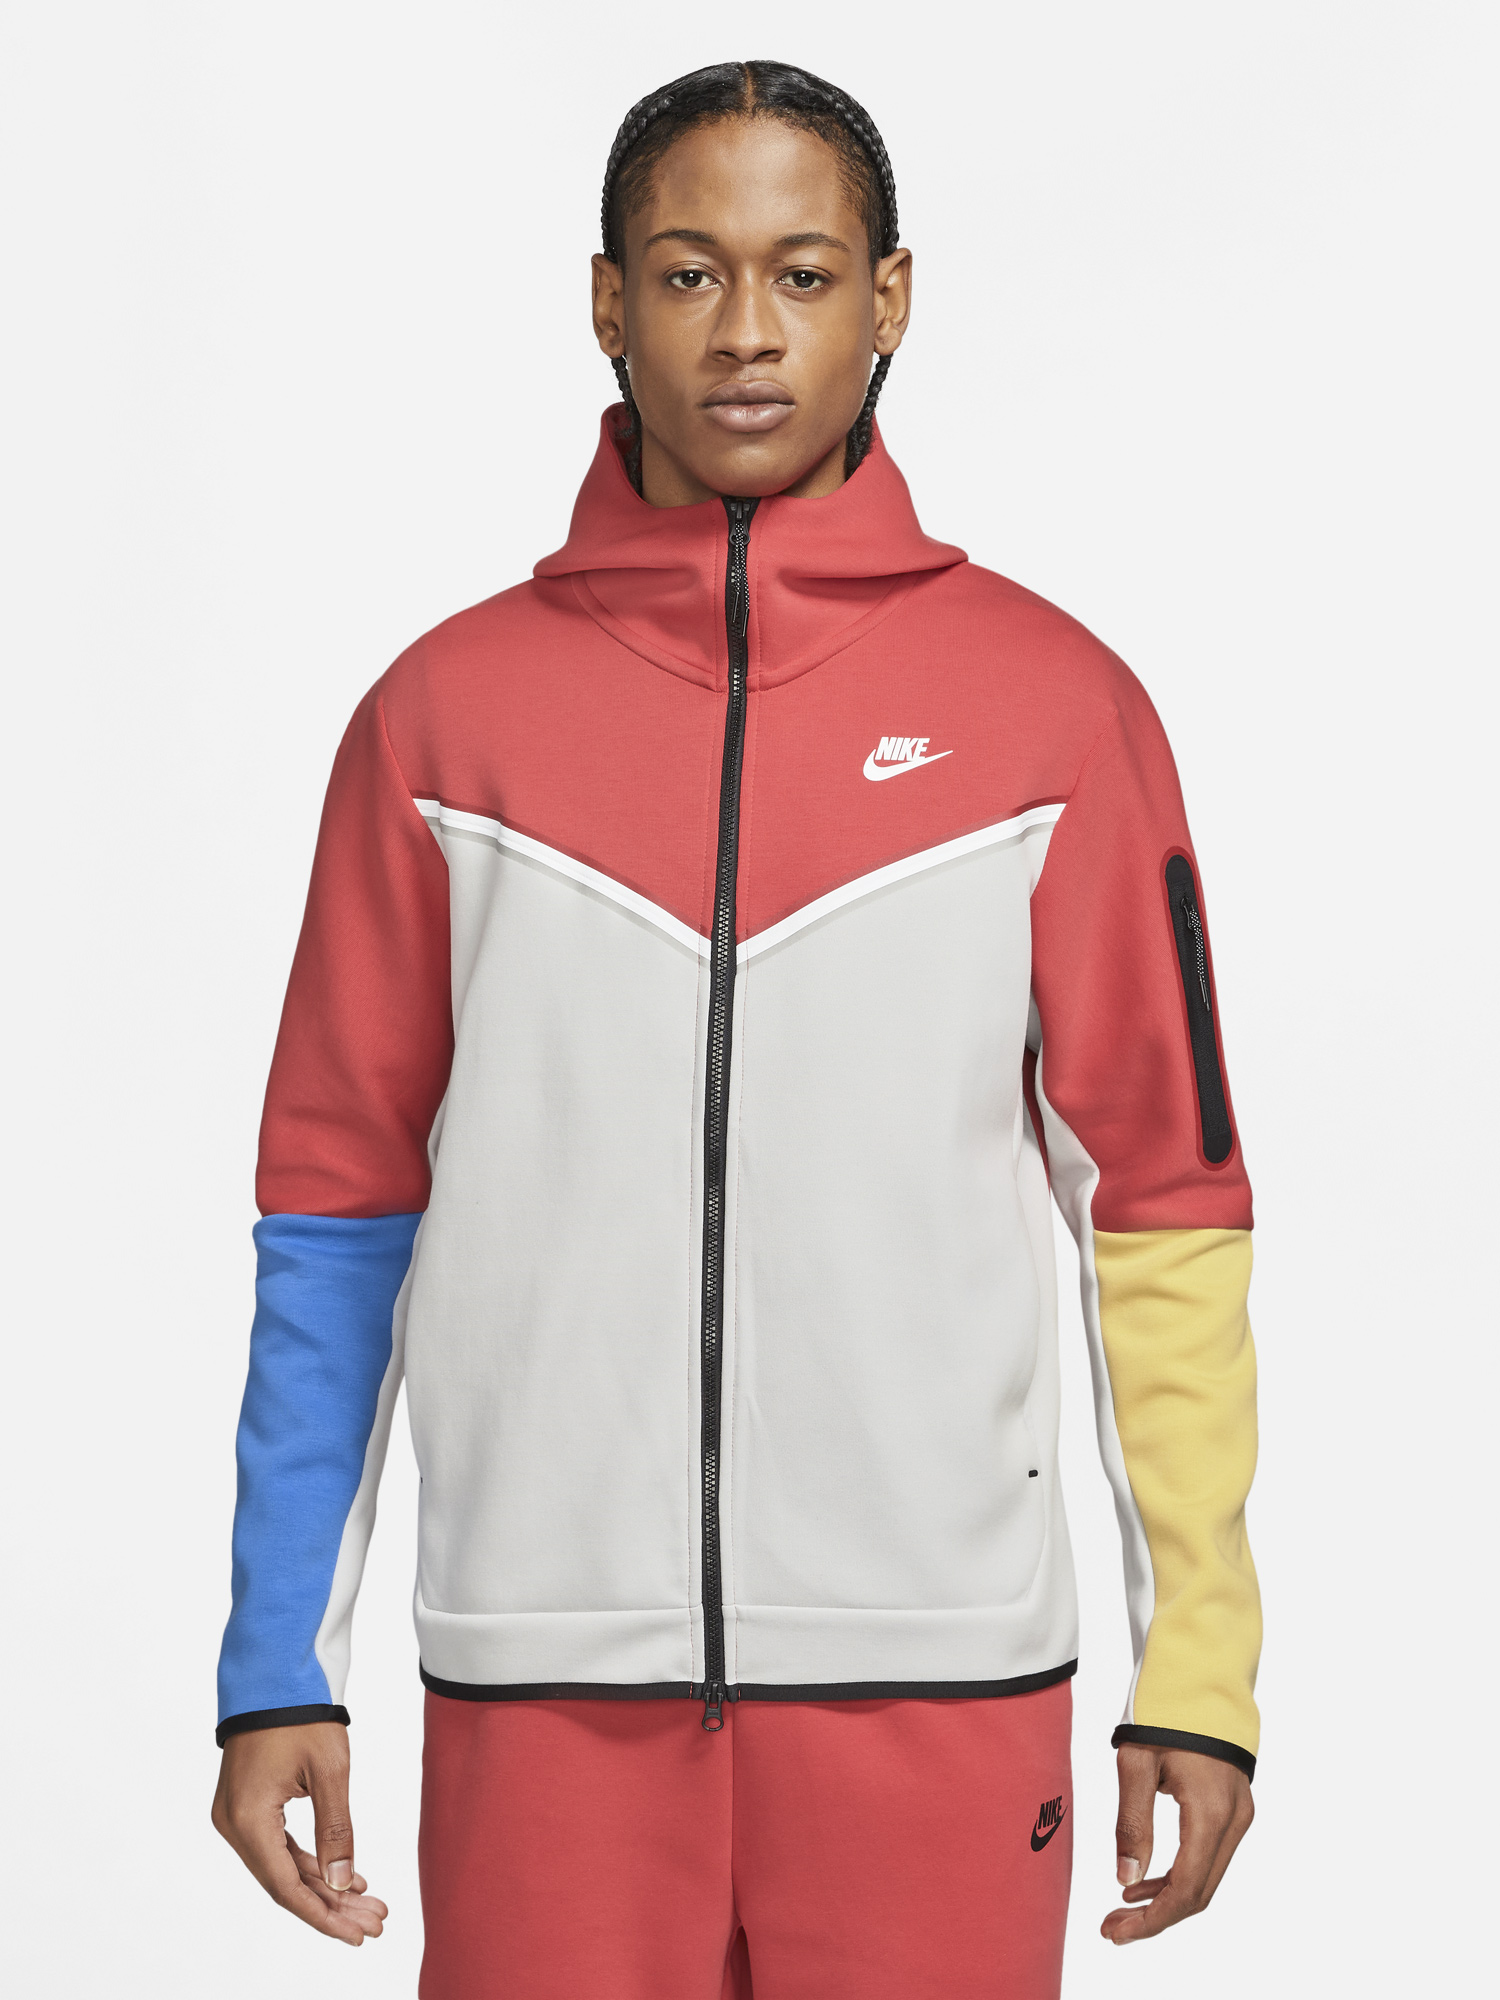 Nike Tech Fleece Multi Color Hoodies for Fall 2021